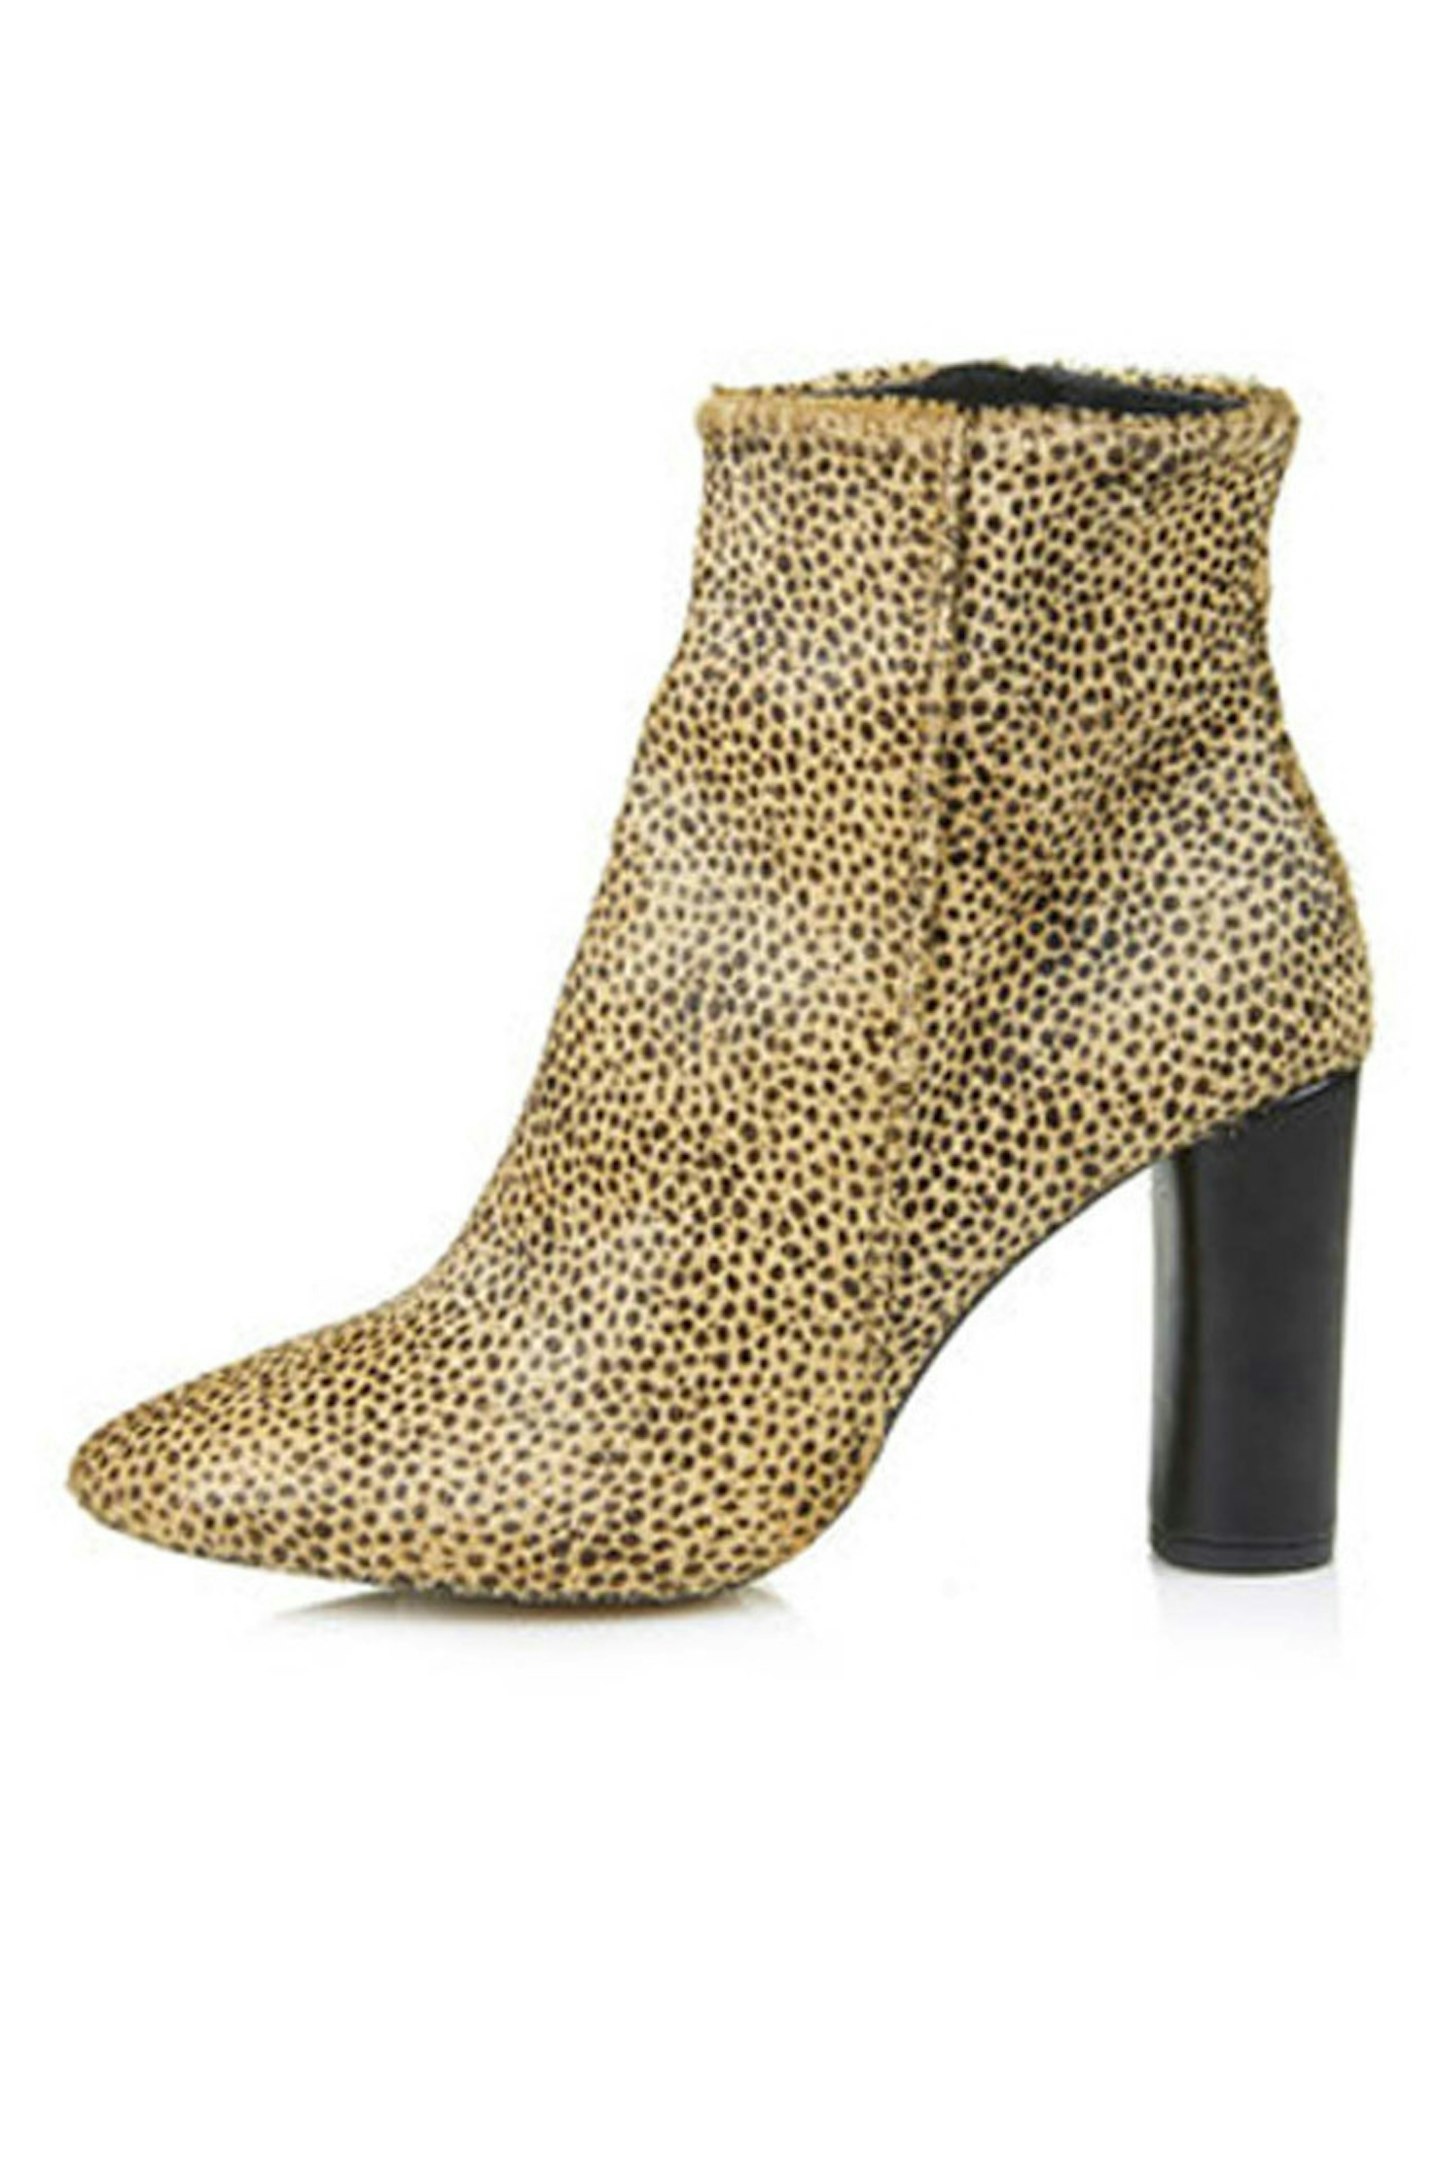 39. Leopard print heeled boots, £82, Topshop